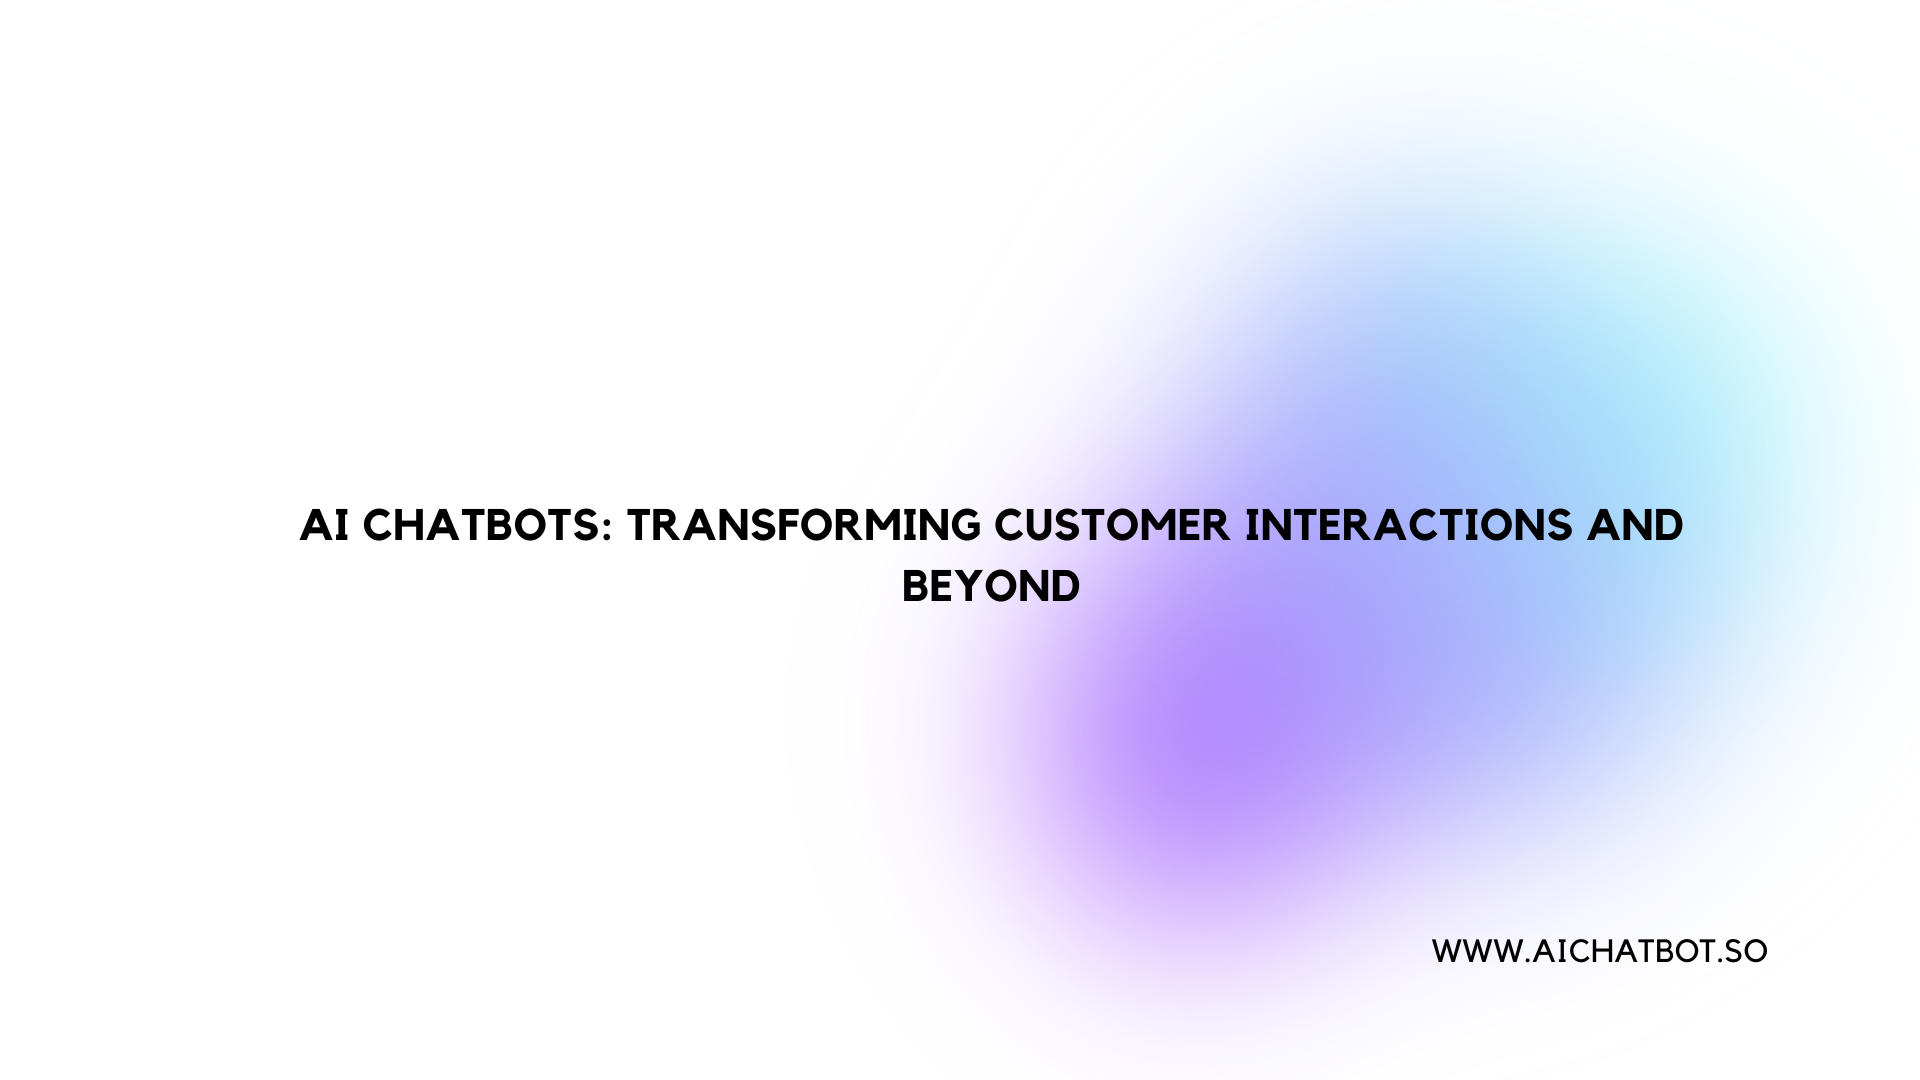 AI Chatbots: Transforming Customer Interactions and Beyond